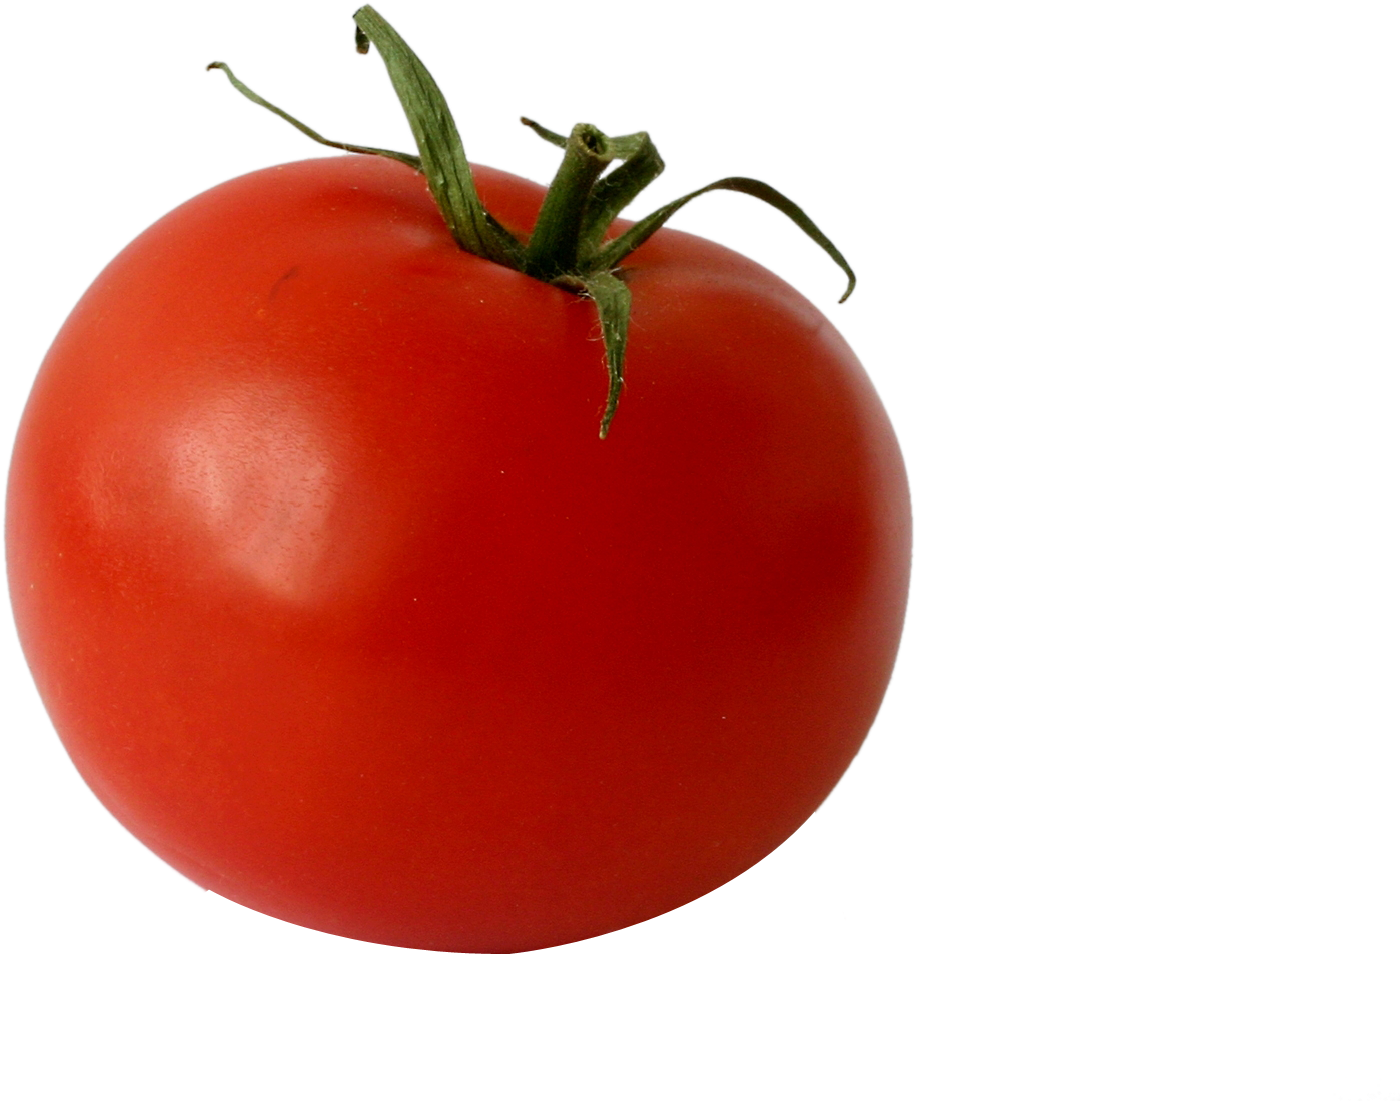 Bush Tomato Serving Size Diet Food - Bush Tomato Serving Size Diet Food (1800x1200)